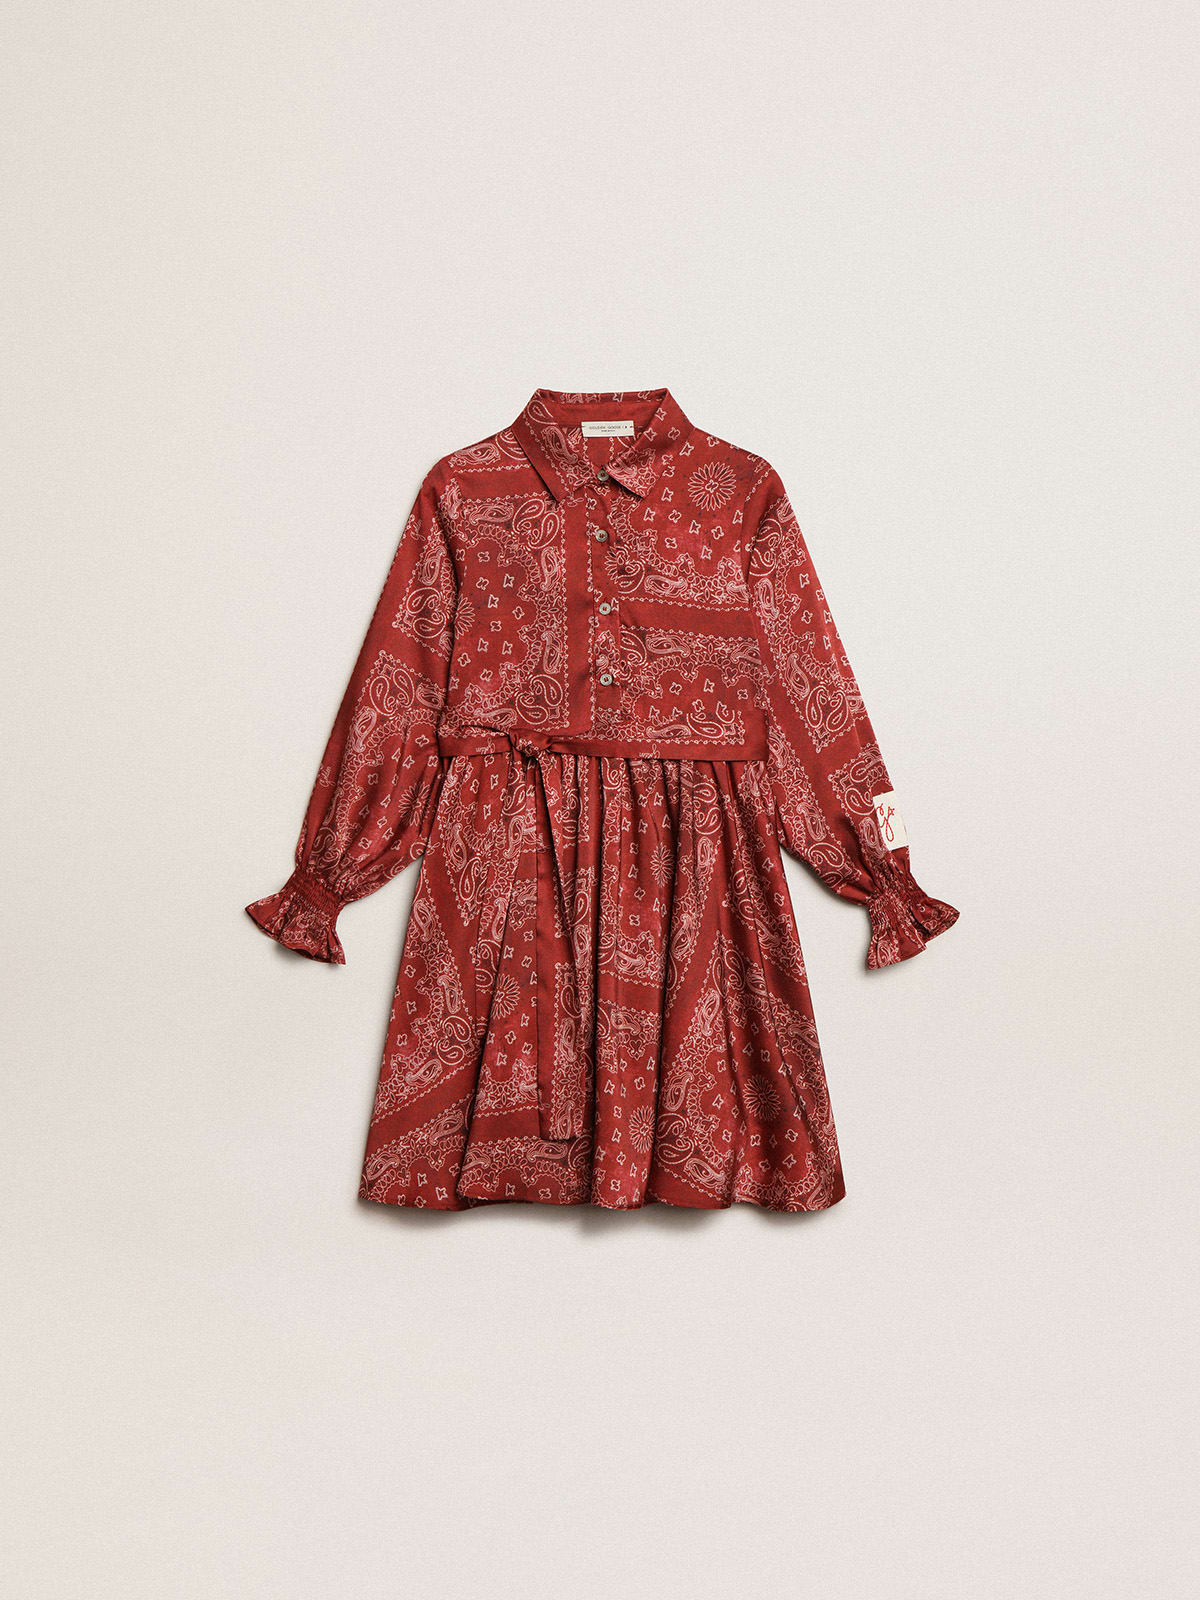 Girls' burgundy shirt dress with paisley print